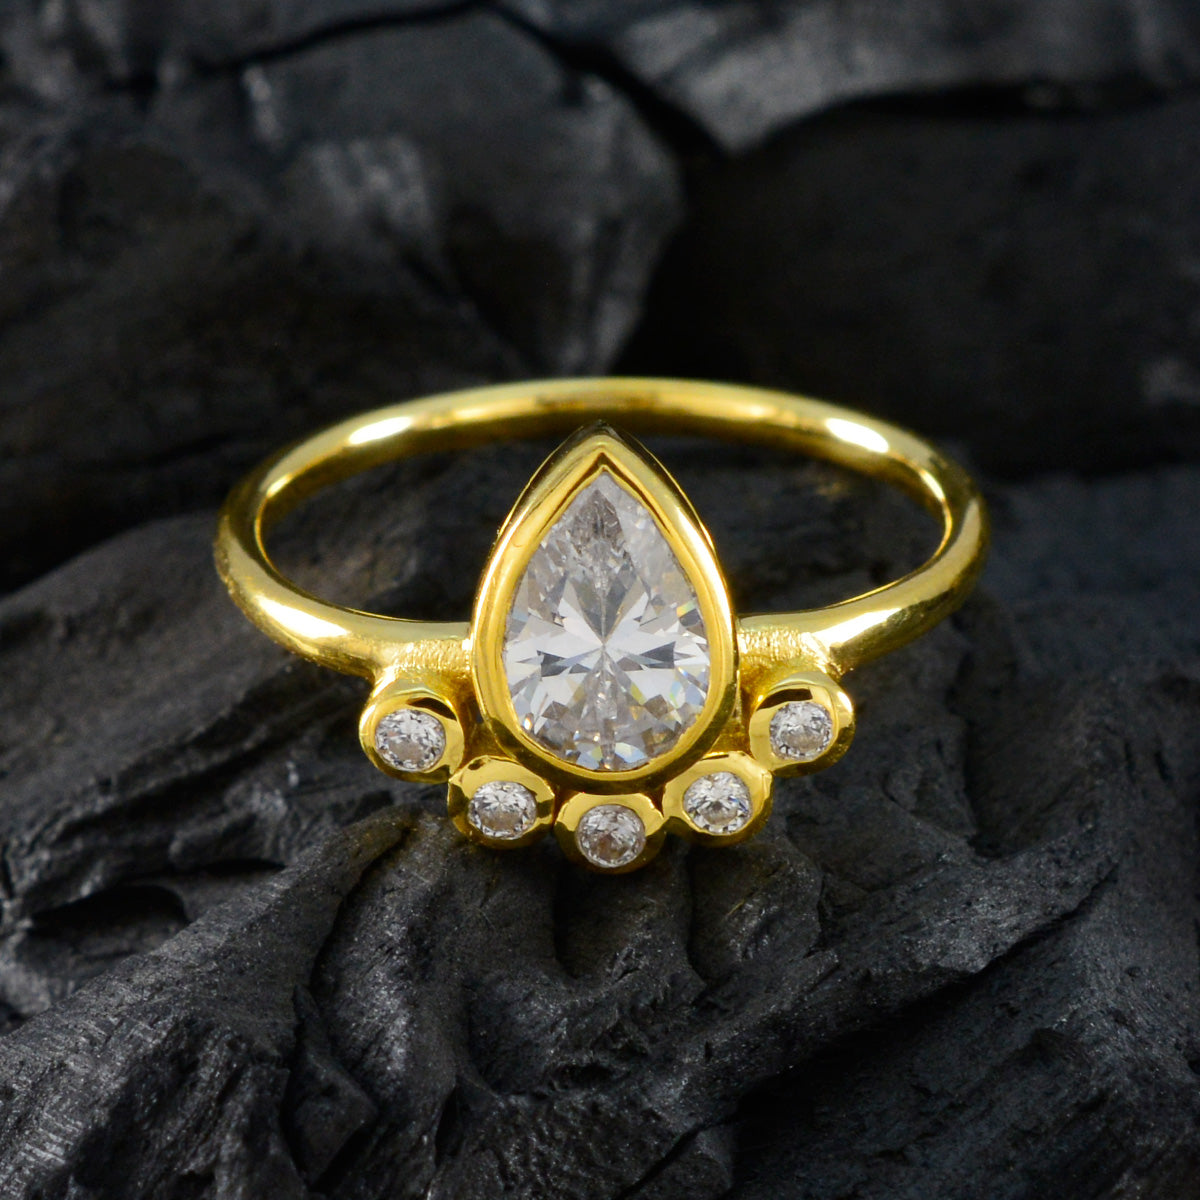 Riyo Jaipur Silver Ring With Yellow Gold Plating White CZ Stone Pear Shape Bezel Setting Ring